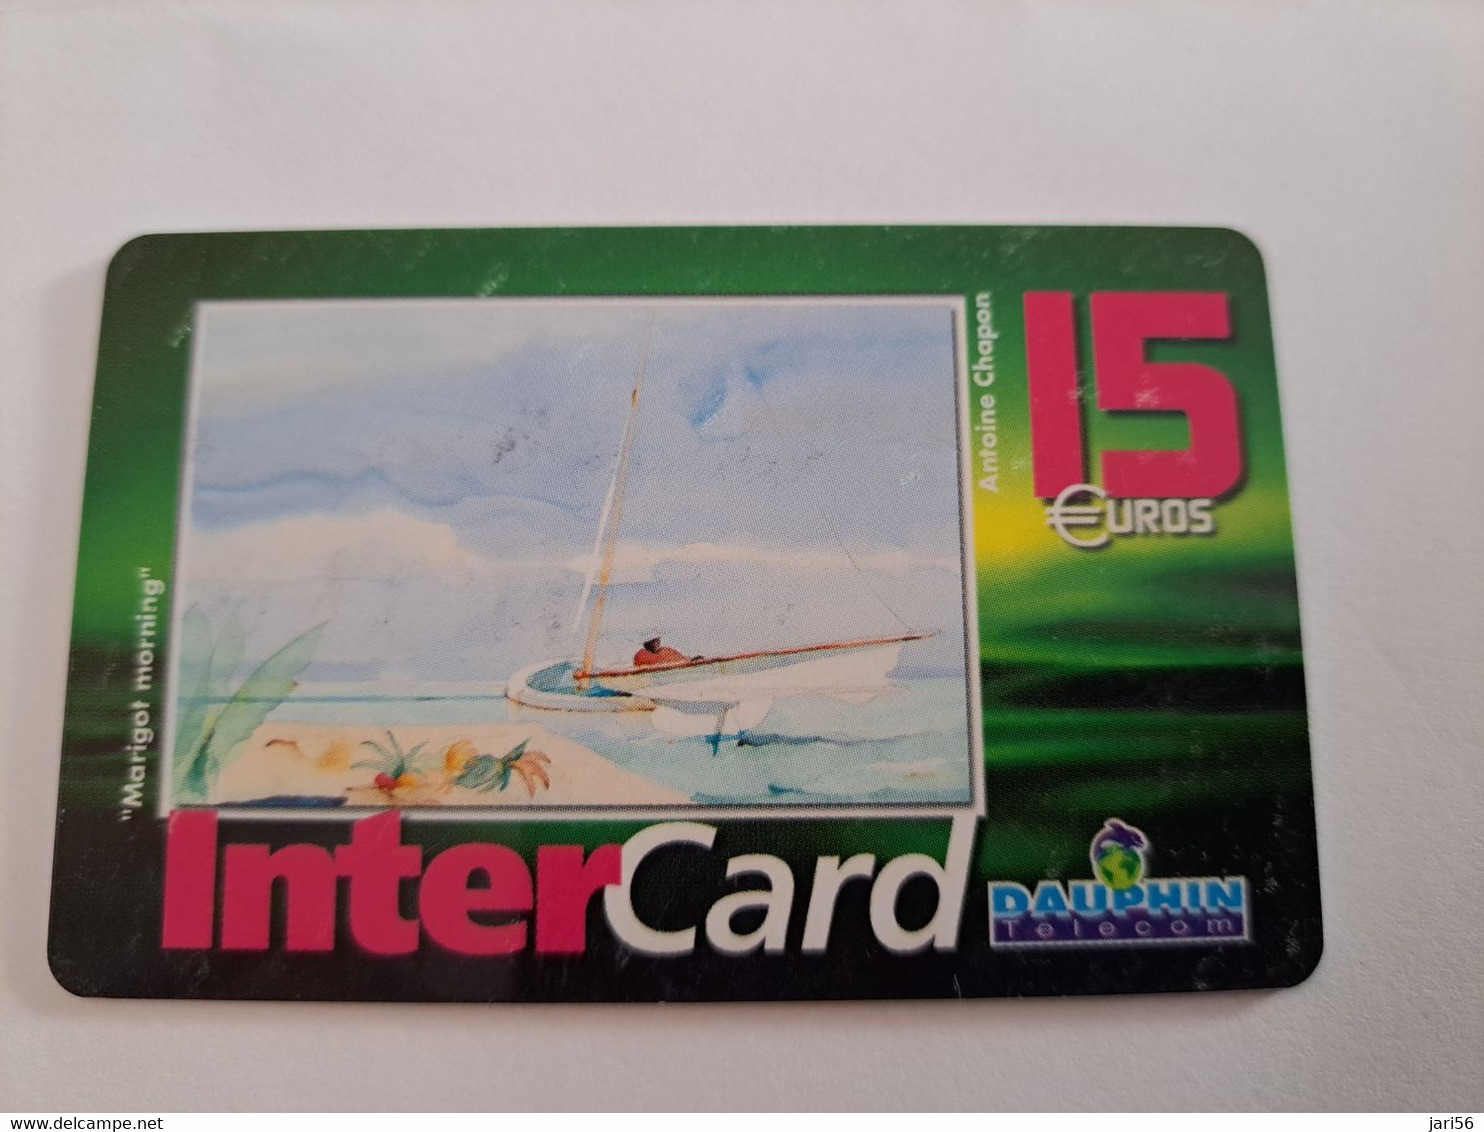 ST MARTIN / INTERCARD  15 EURO  MARIGOT MORNING     NO 042   Fine Used Card    ** 10896 ** - Antillen (Frans)